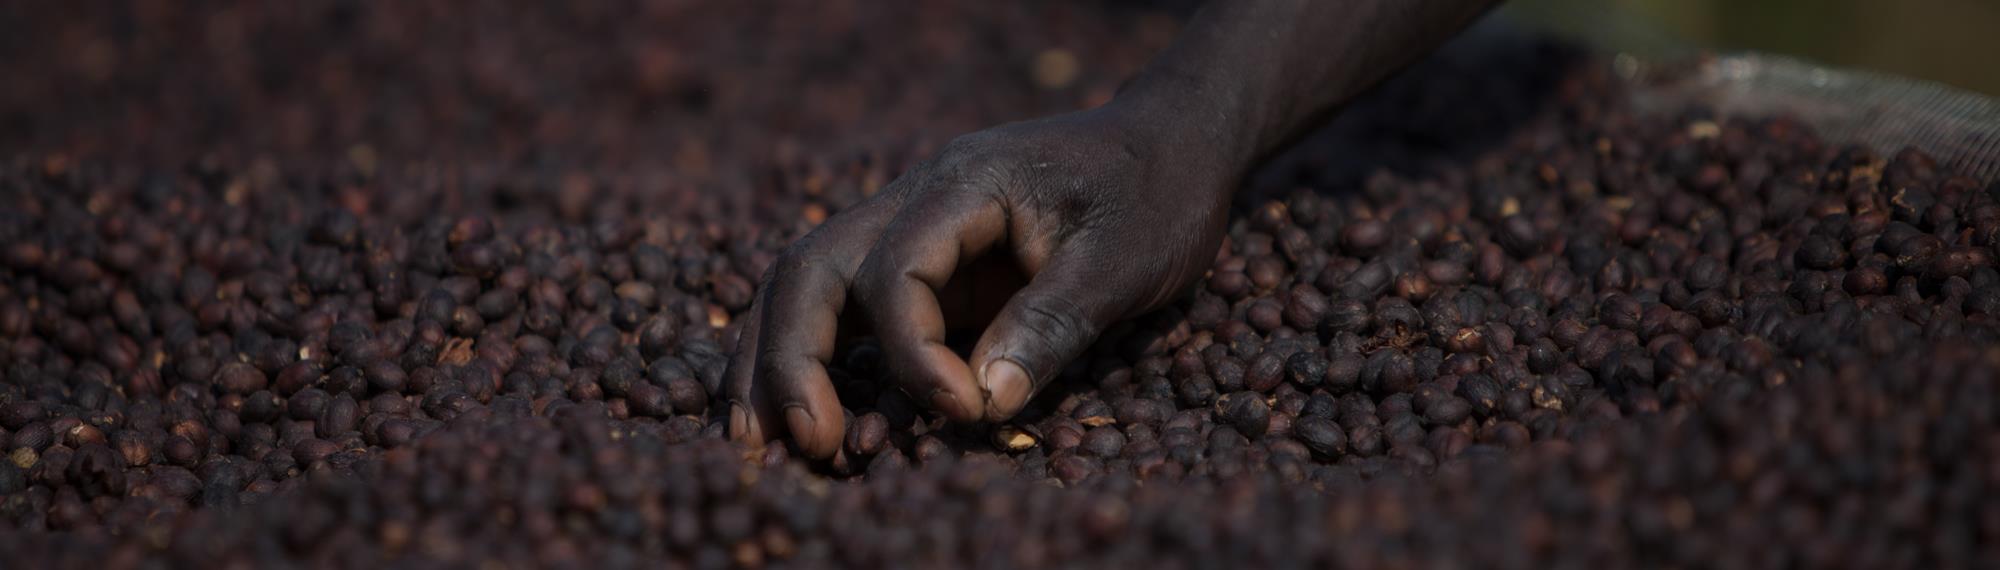 A hand sifting through brown coffee beans